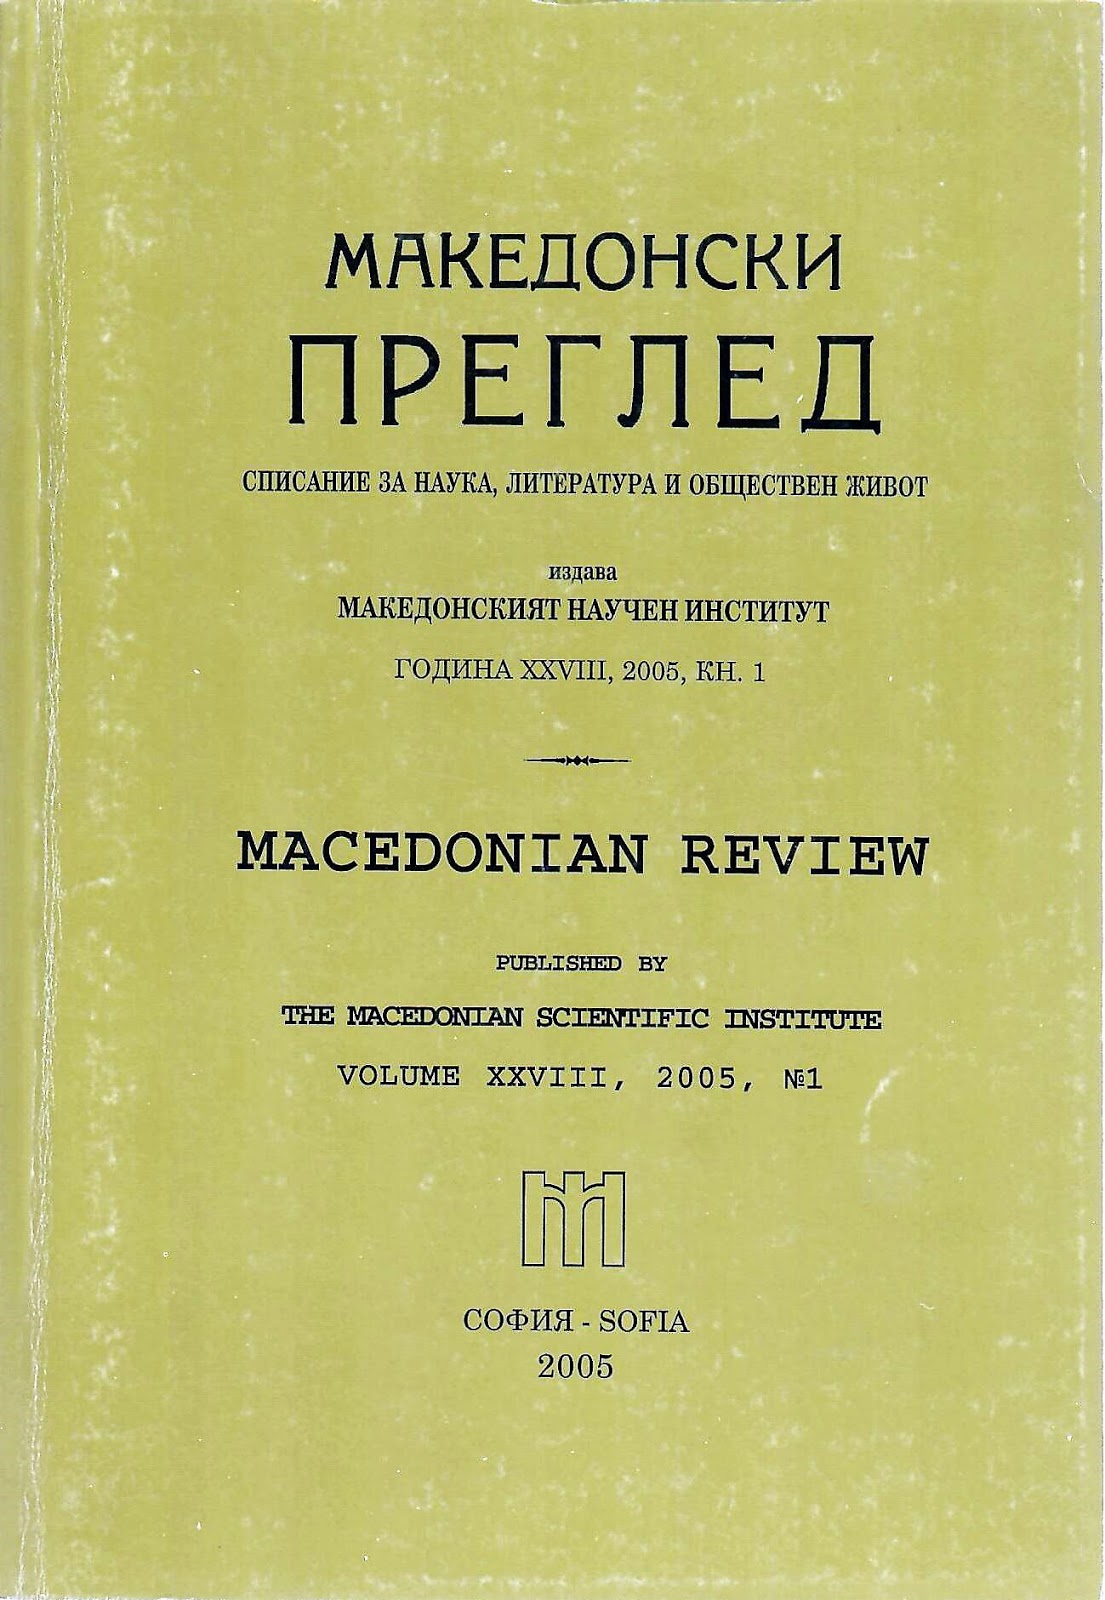 Valentin Kitanov. Contribution to the diplomatic history of Bulgaria. Sofia, 2004,544 p. Review by Dr. Dimitar Tyulekov Cover Image